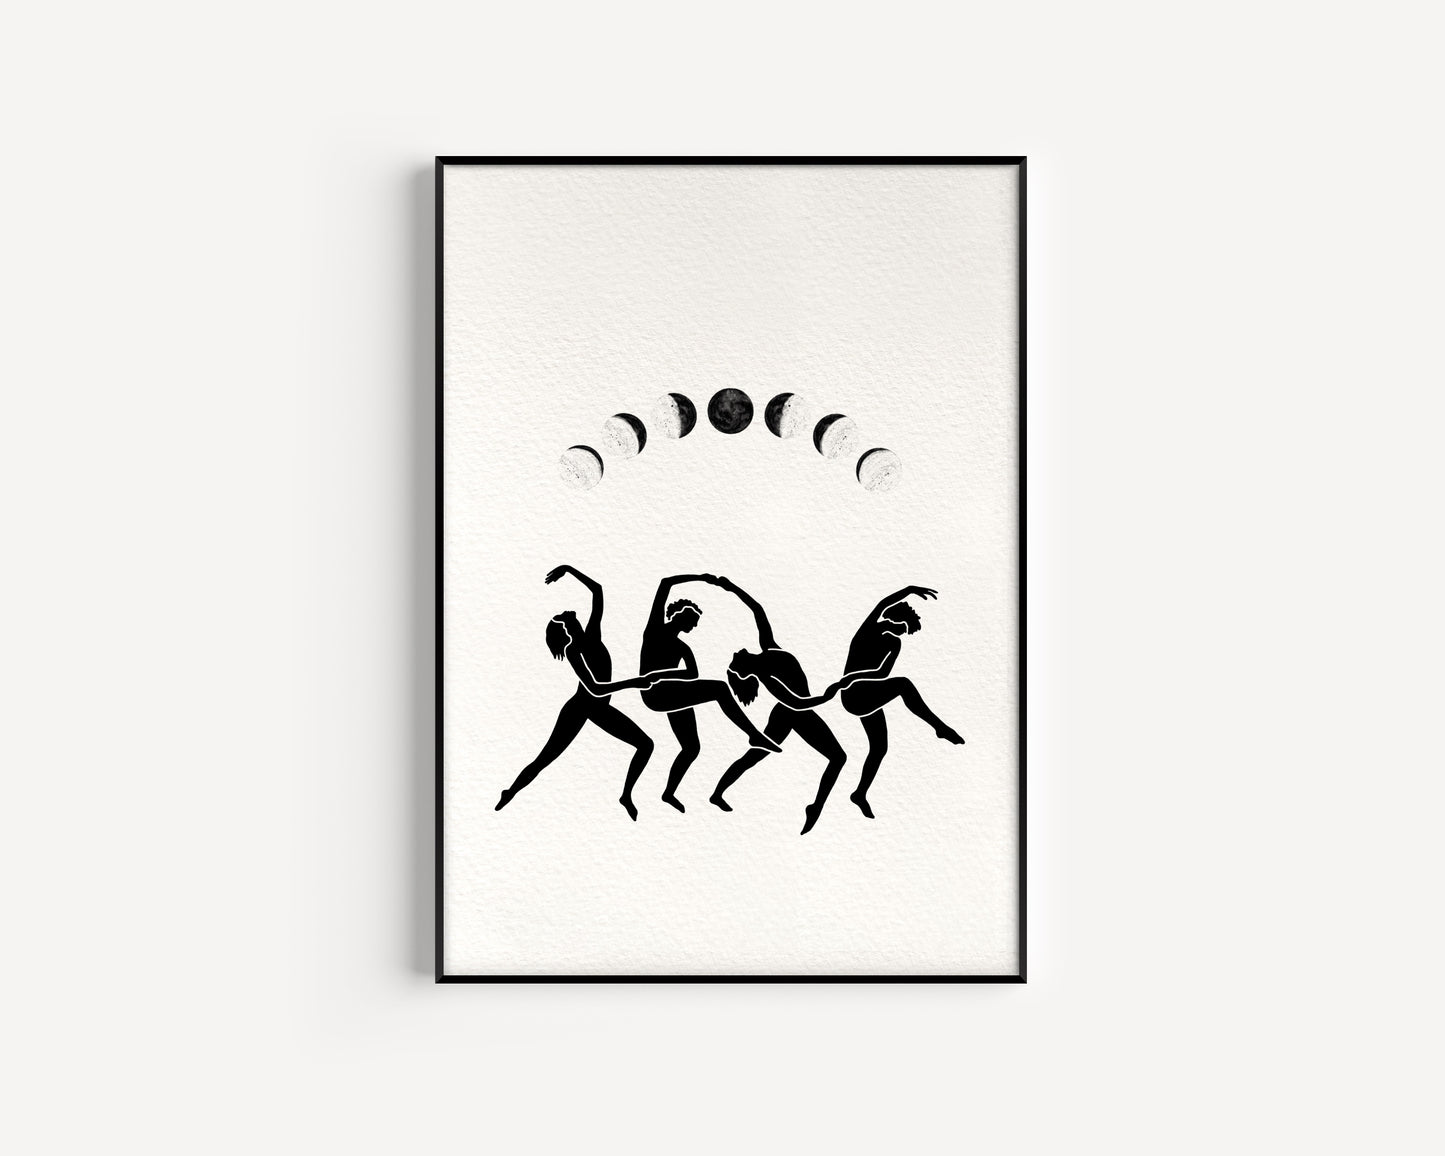 Moon Dancers - Art print - A4